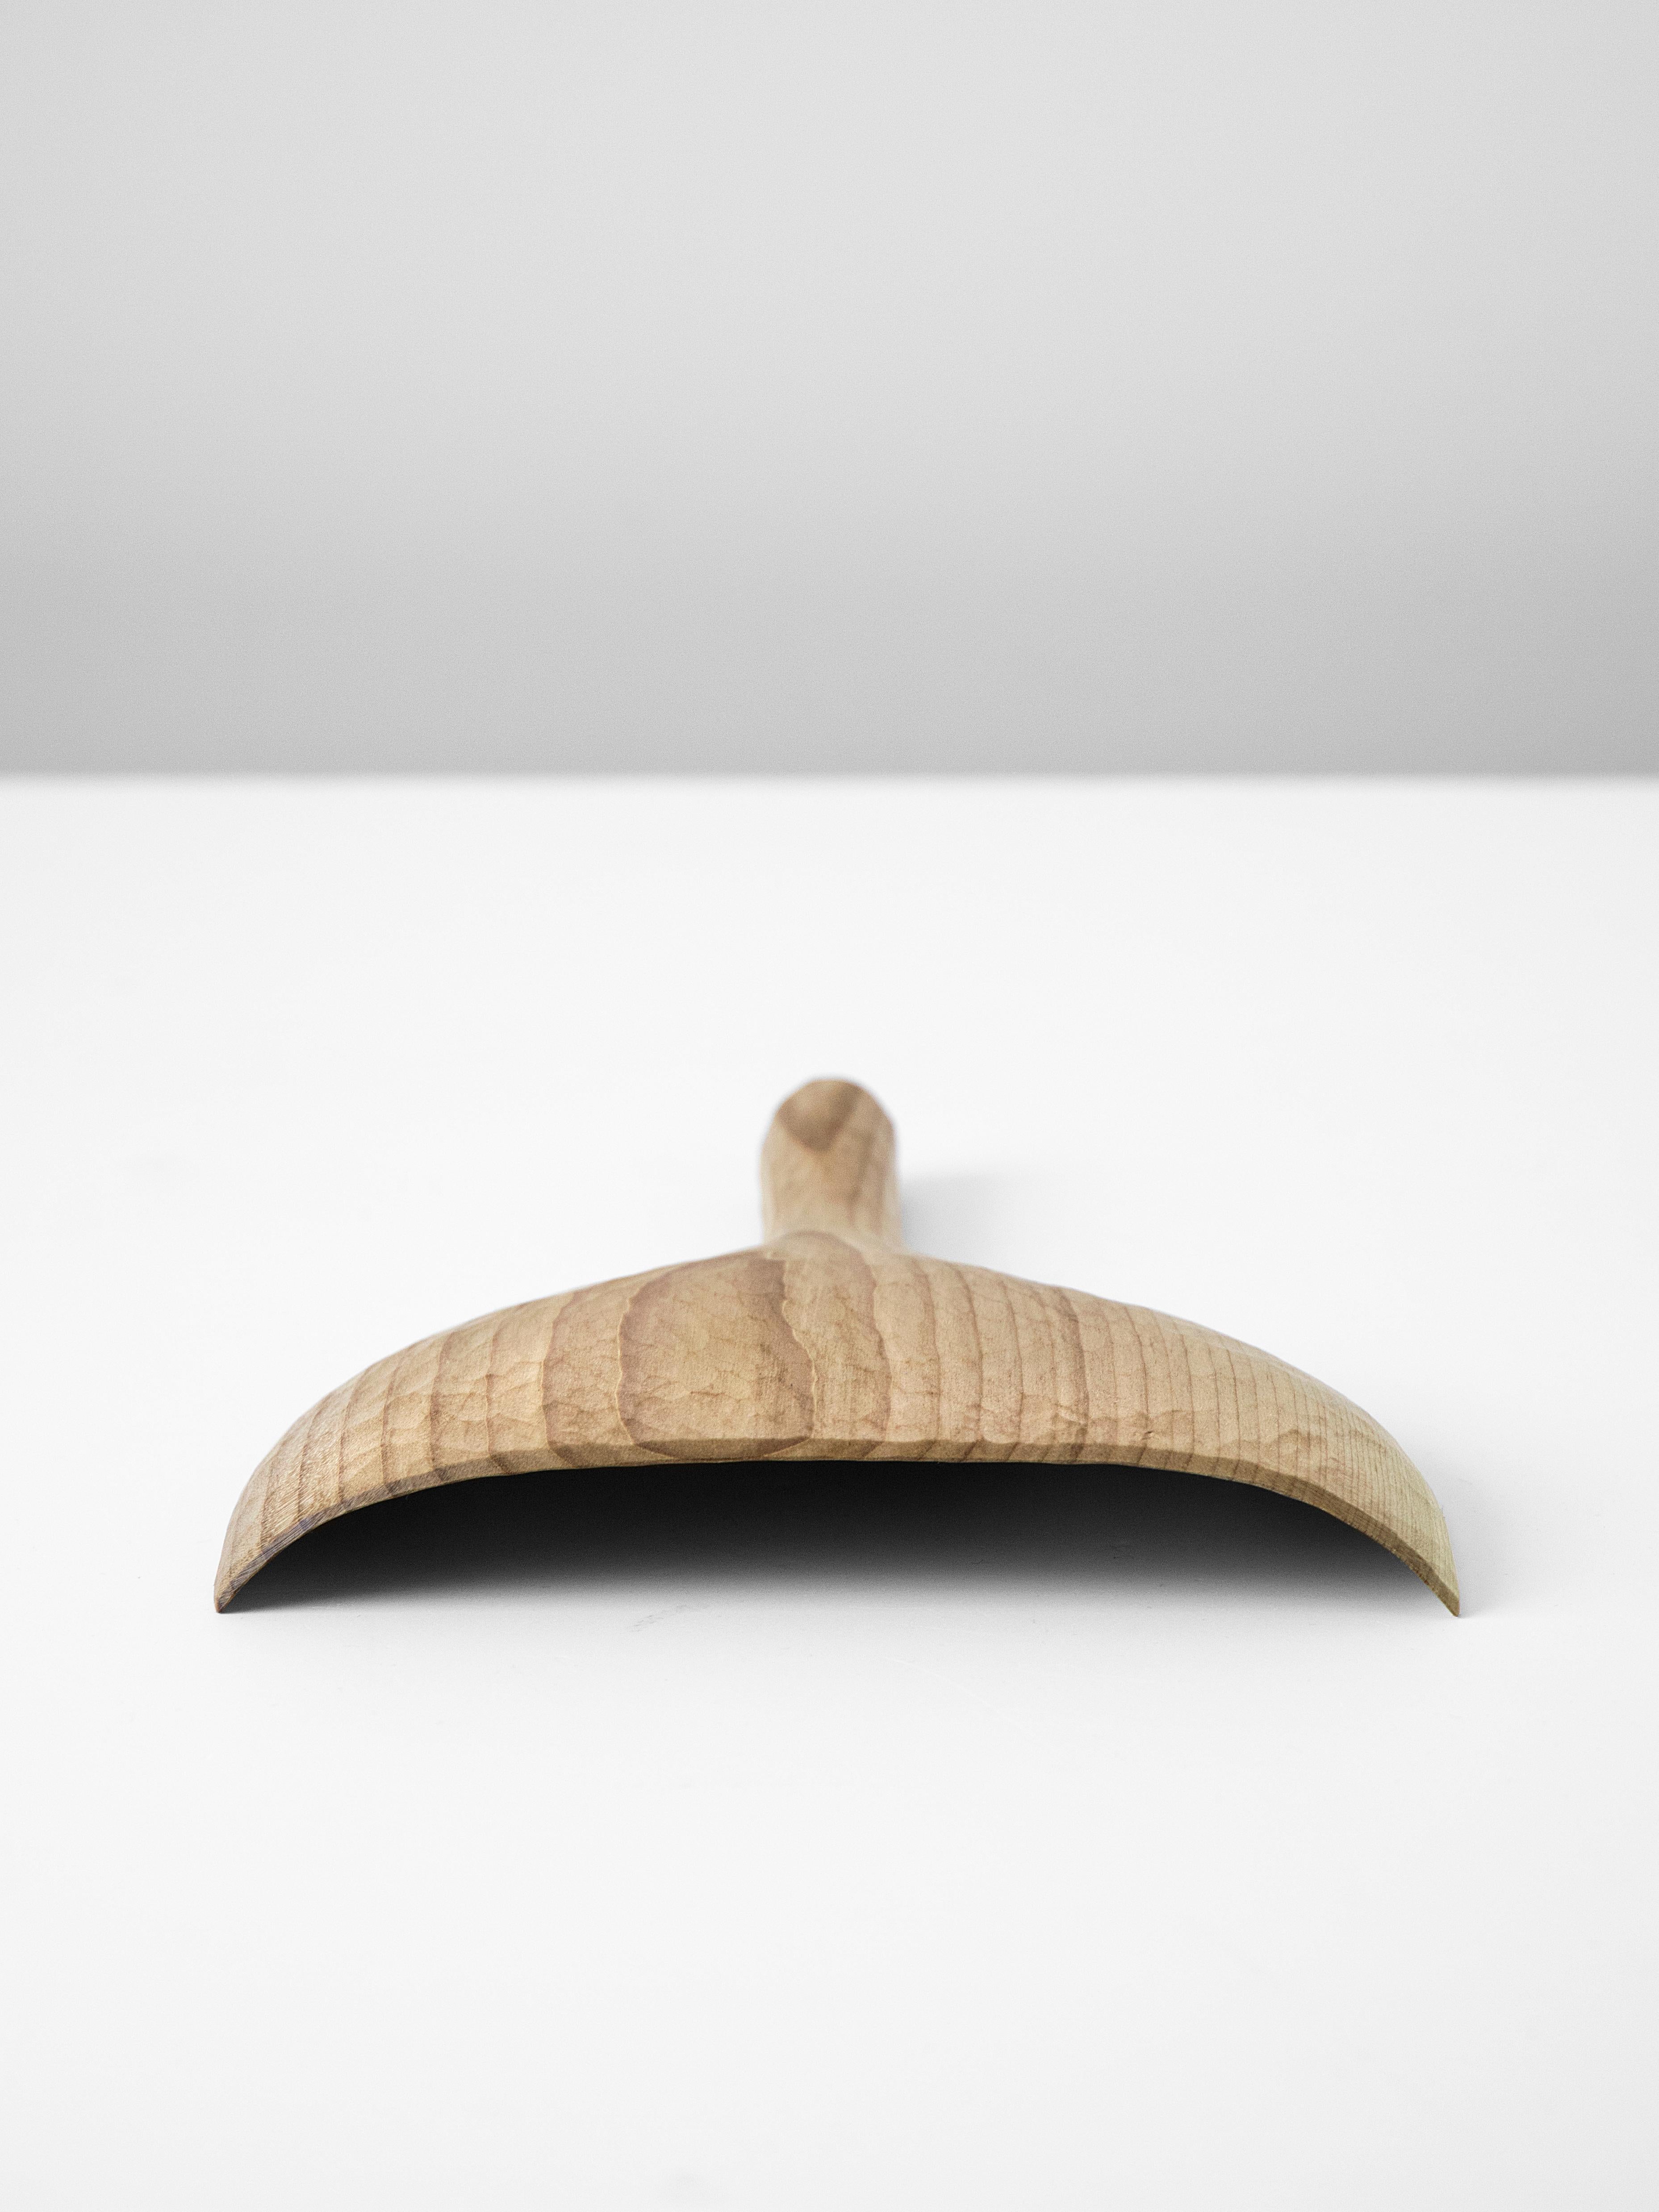 French Sculptural Magnolia Spoon, Handmade in France Designer Ferréol Babin One of Kind For Sale